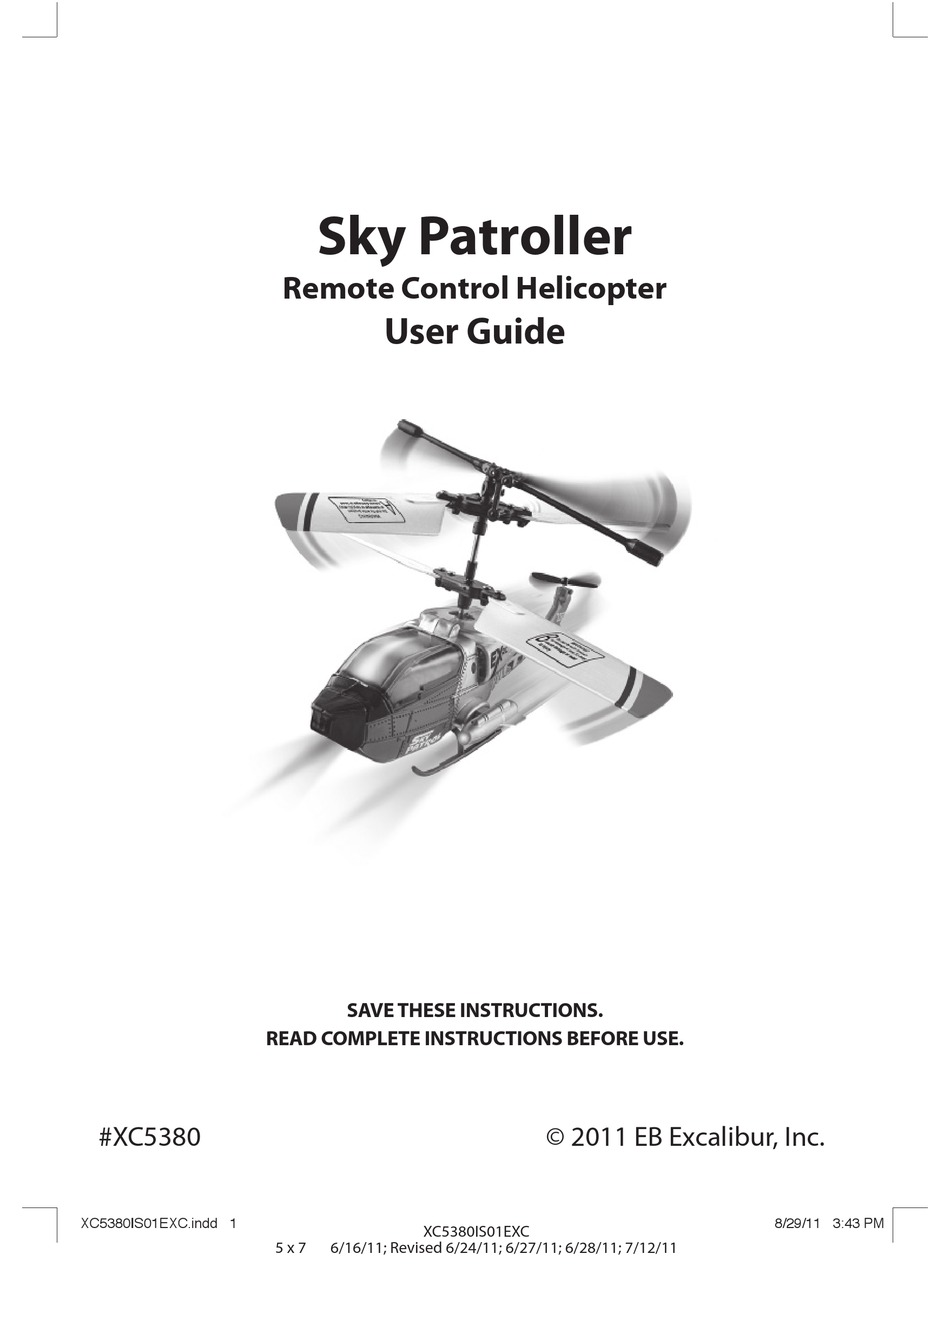 EB EXCALIBUR SKY PATROLLER USER MANUAL Pdf Download | ManualsLib